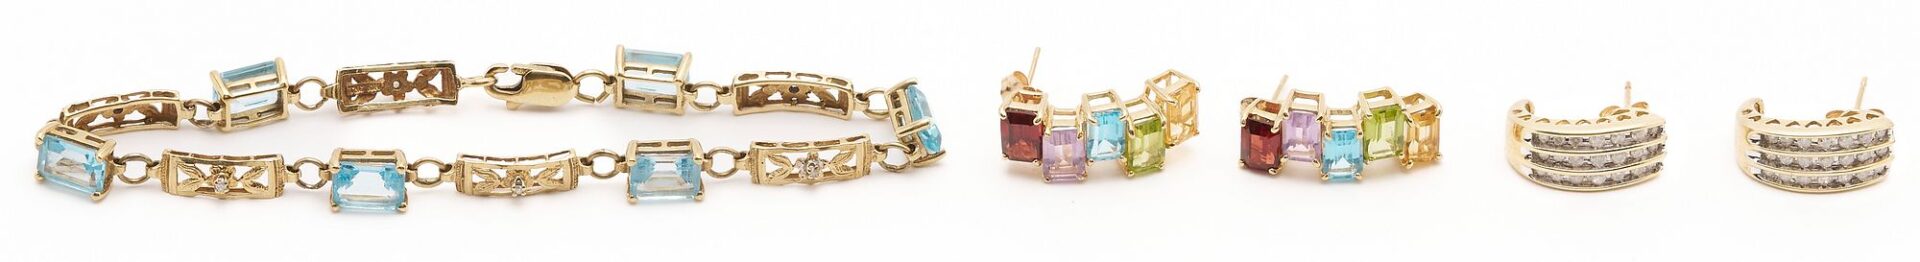 Lot 1039: Gold & Gemstone Jewelry